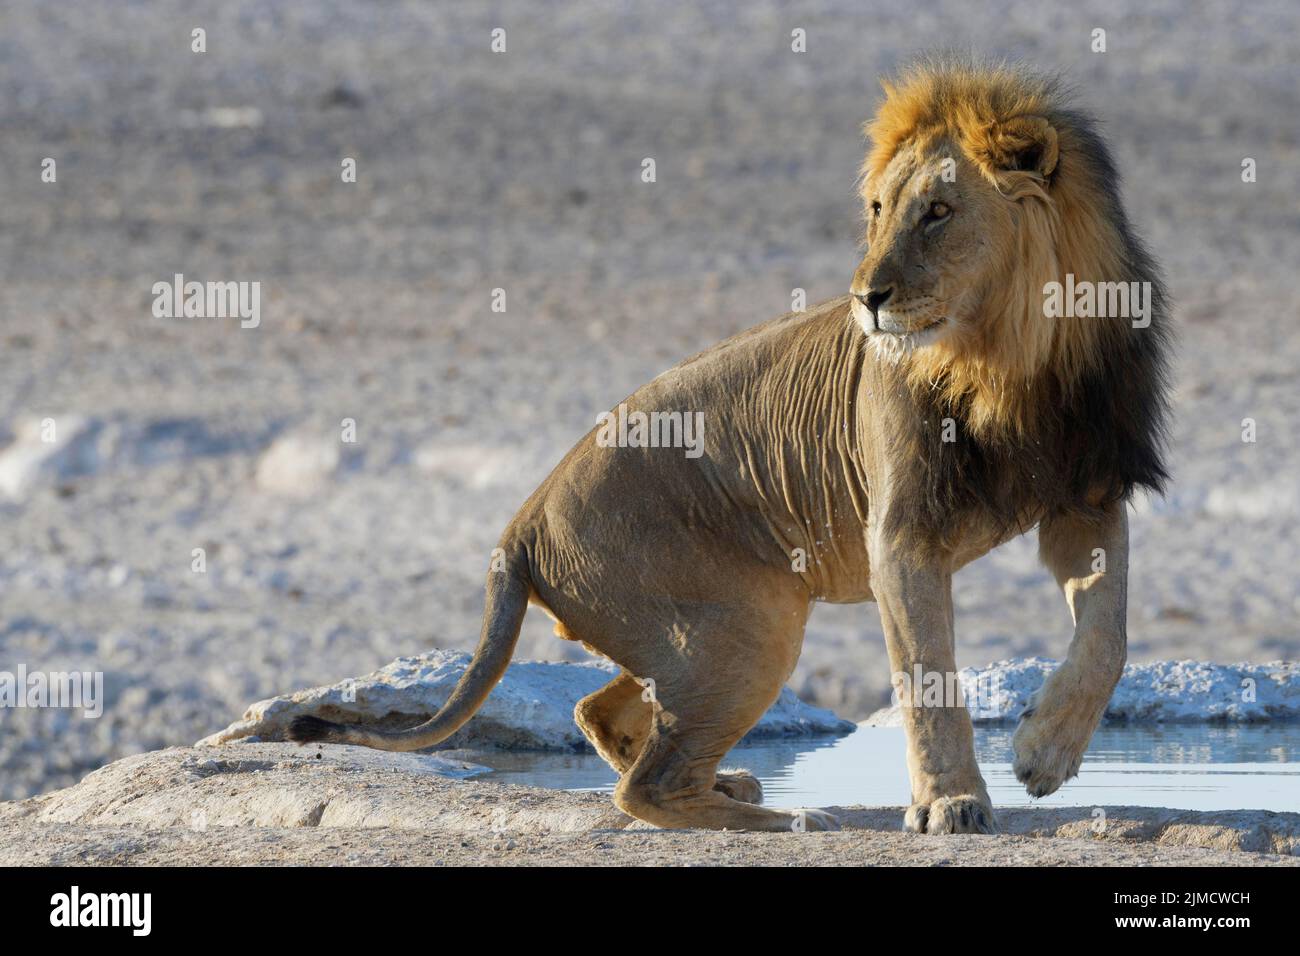 León africano (Panthera leo), león adulto adulto ascendente, en el pozo de agua, alerta, Parque Nacional Etosha, Namibia, África Foto de stock